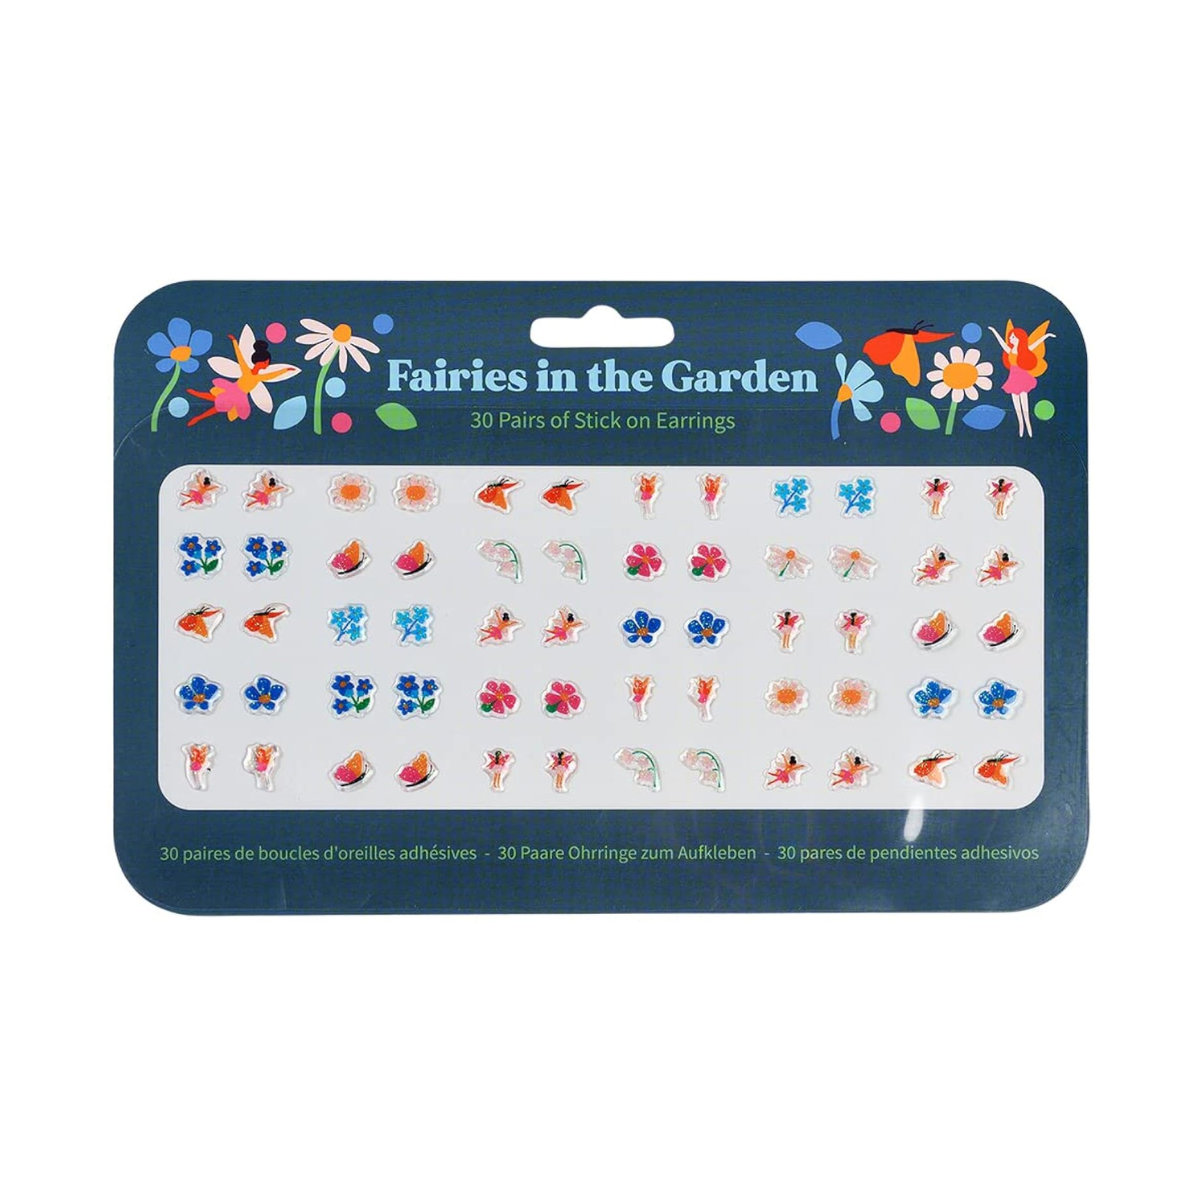 Fairies in the Garden - Stick on Earrings